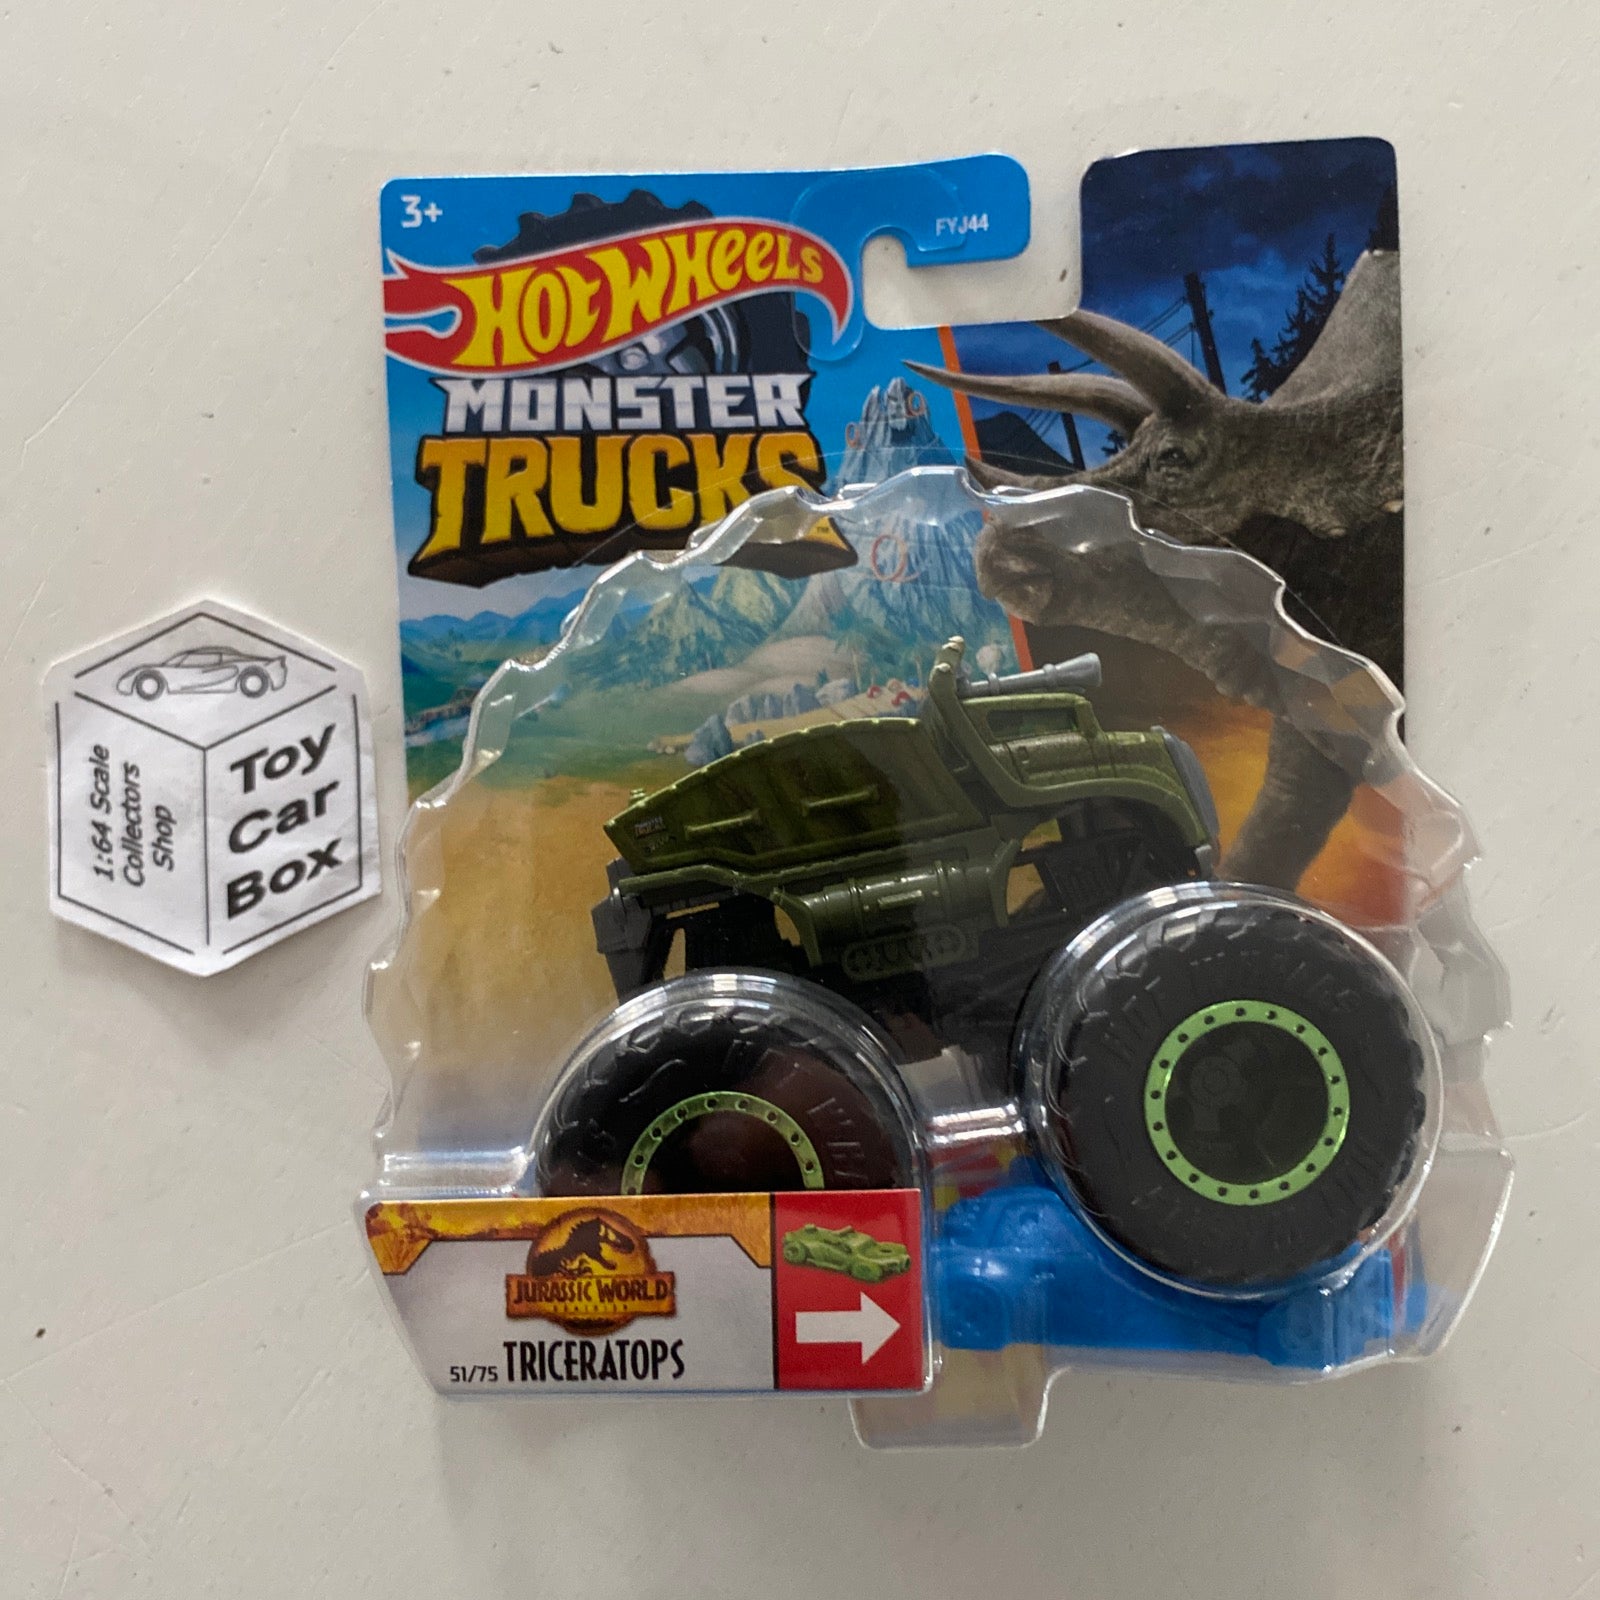 New Hot Wheels 1/64 Monster Trucks Jurassic World Series Triceratops  Dinosaur